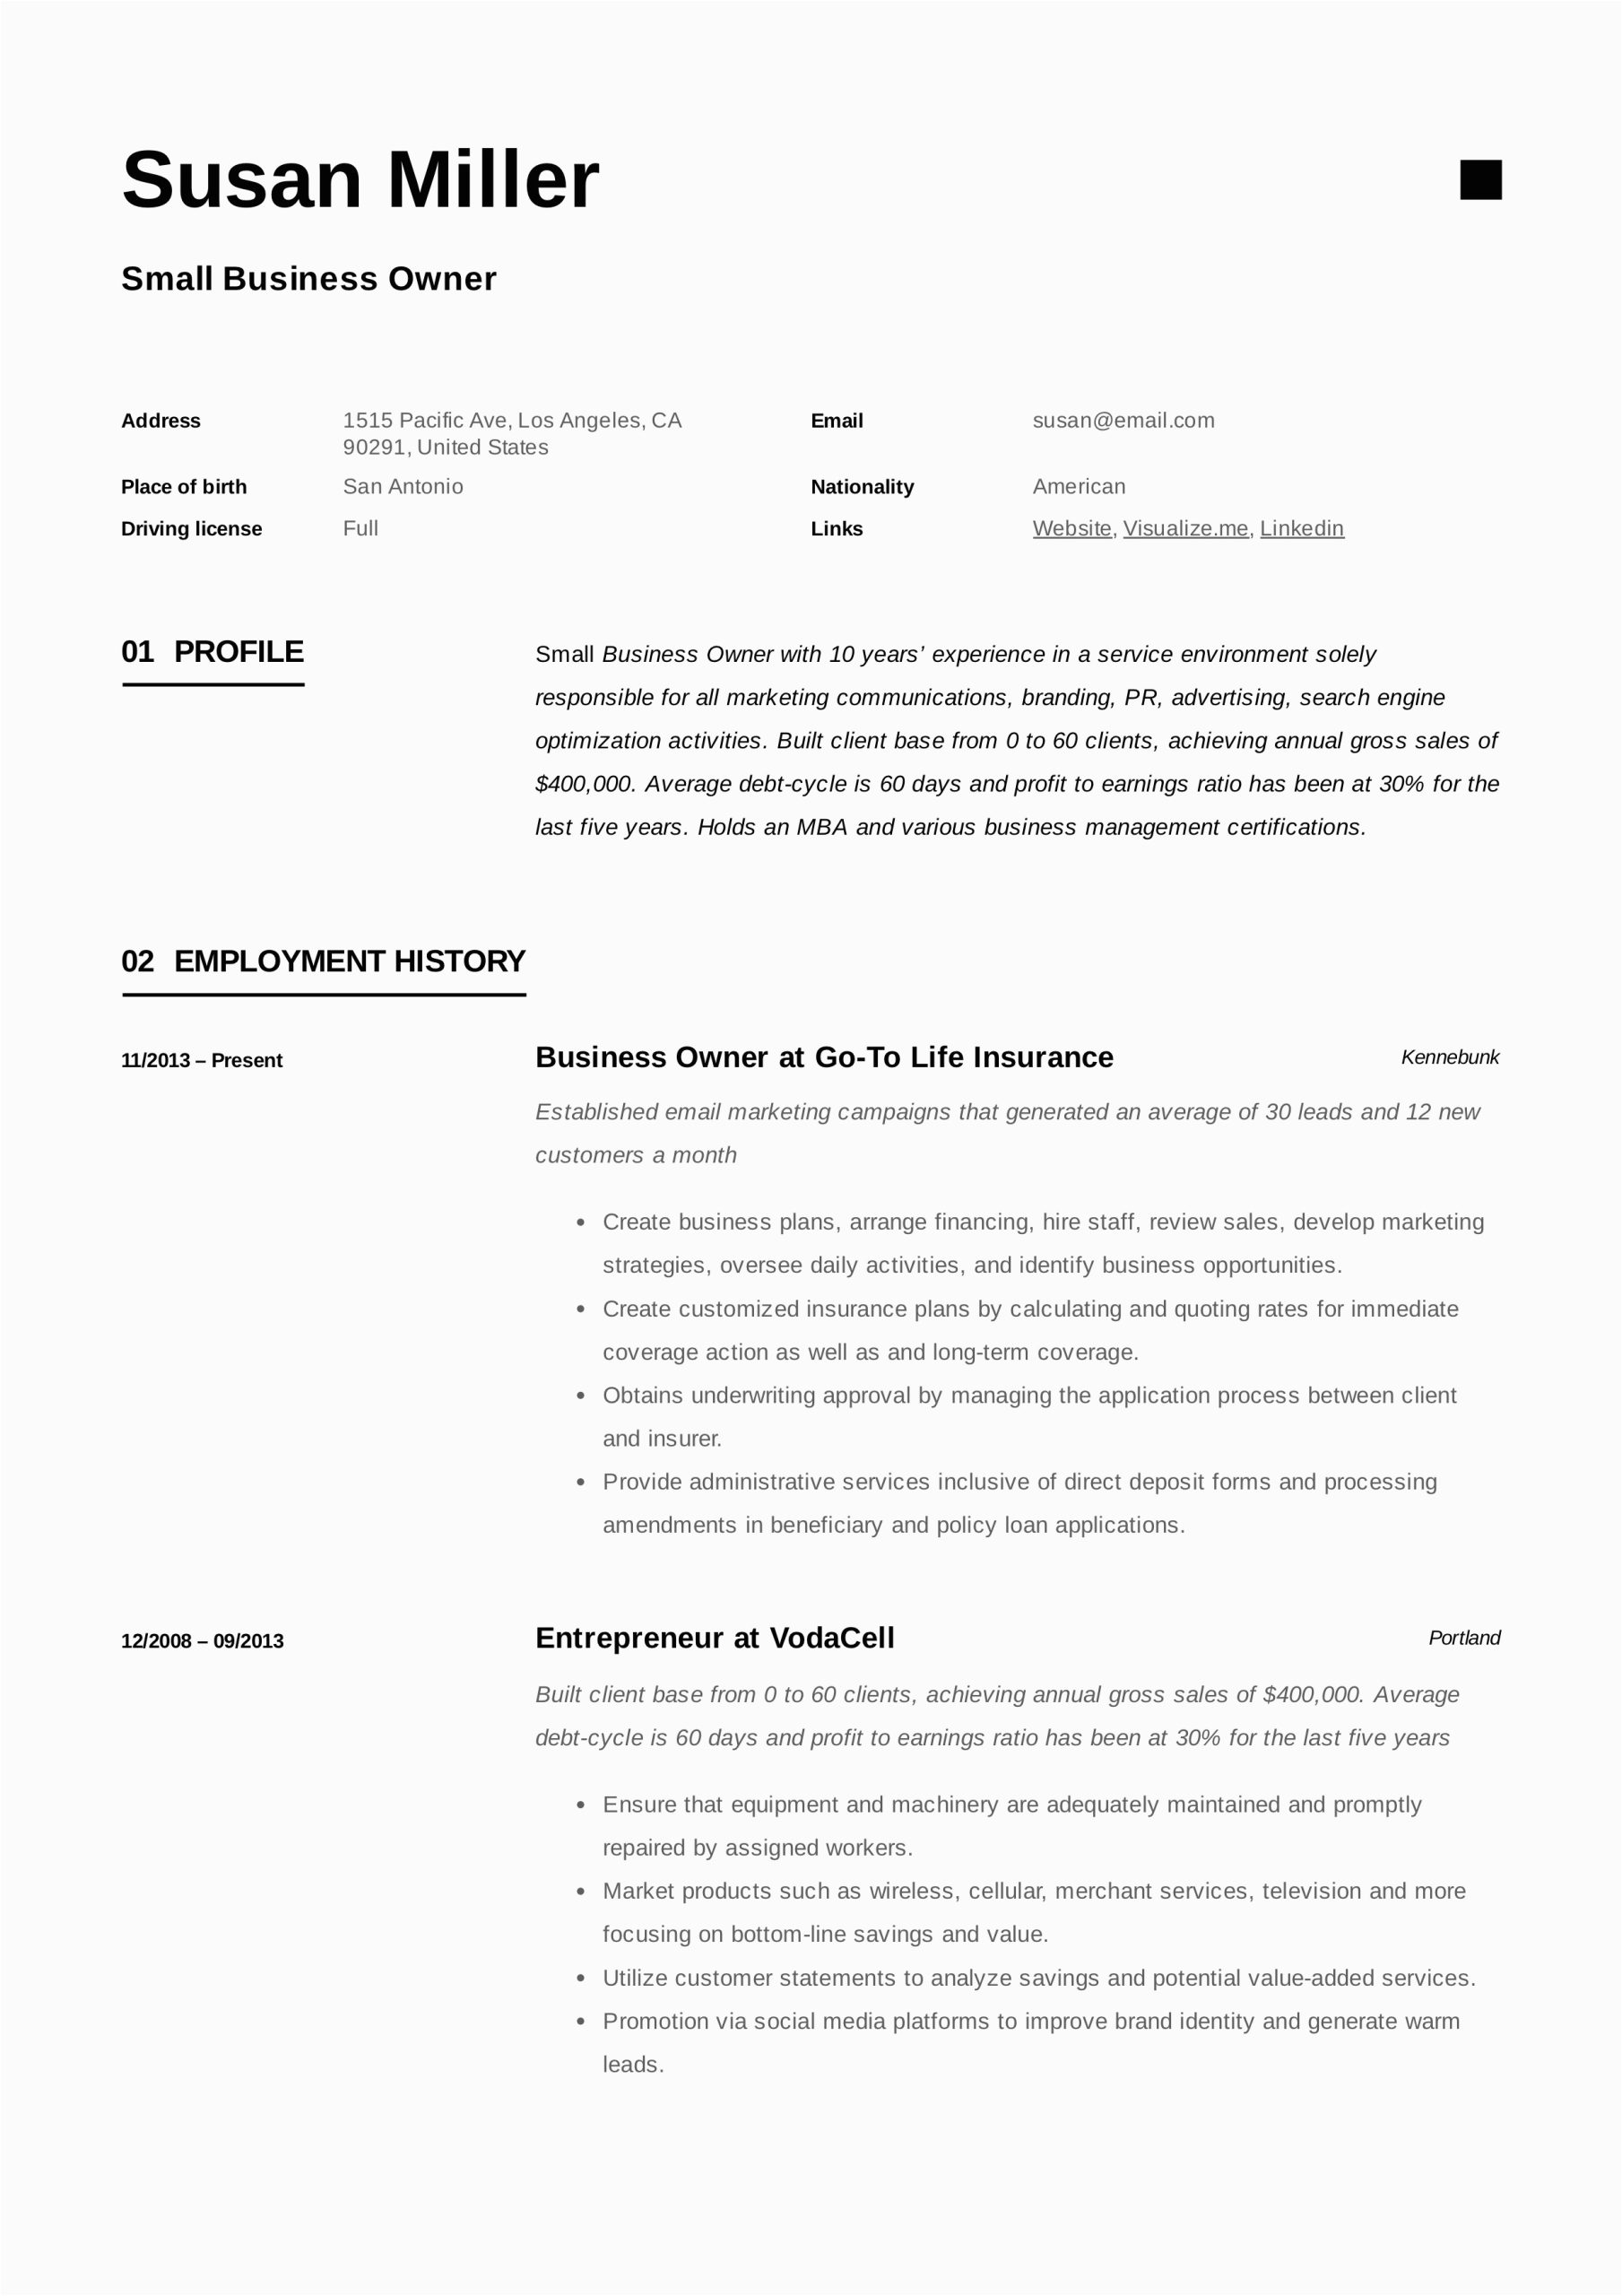 Small Business Owner Job Description Sample Resume Small Business Owner Resume Guide 12 Examples Pdf